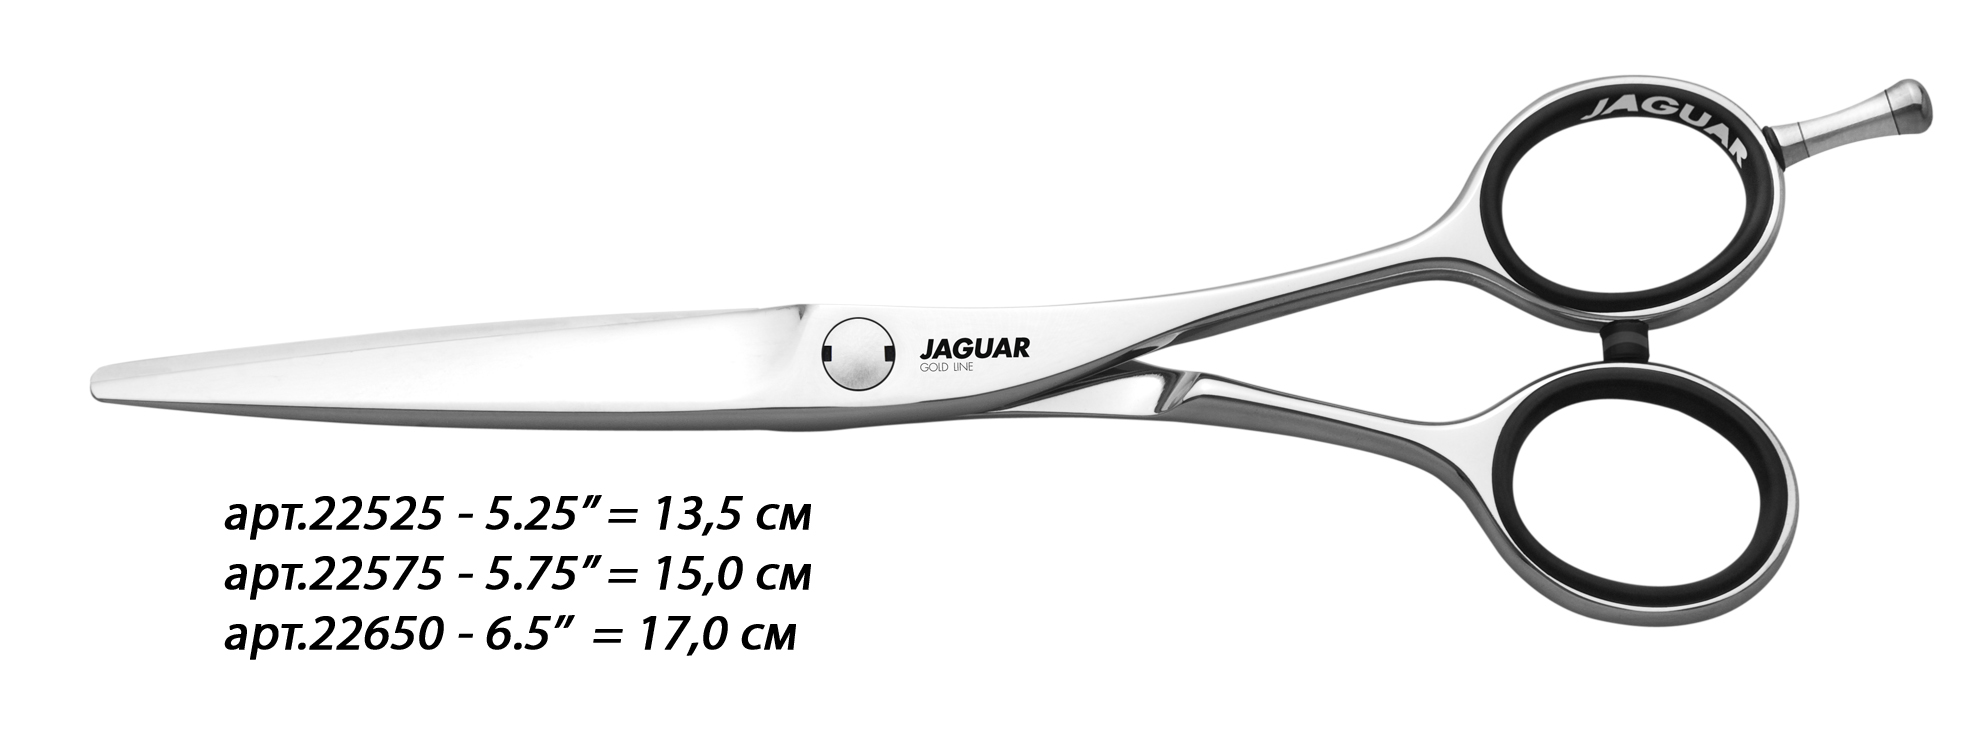 JAGUAR Ножницы Jaguar Dynasty 5,75'(15cm)GL